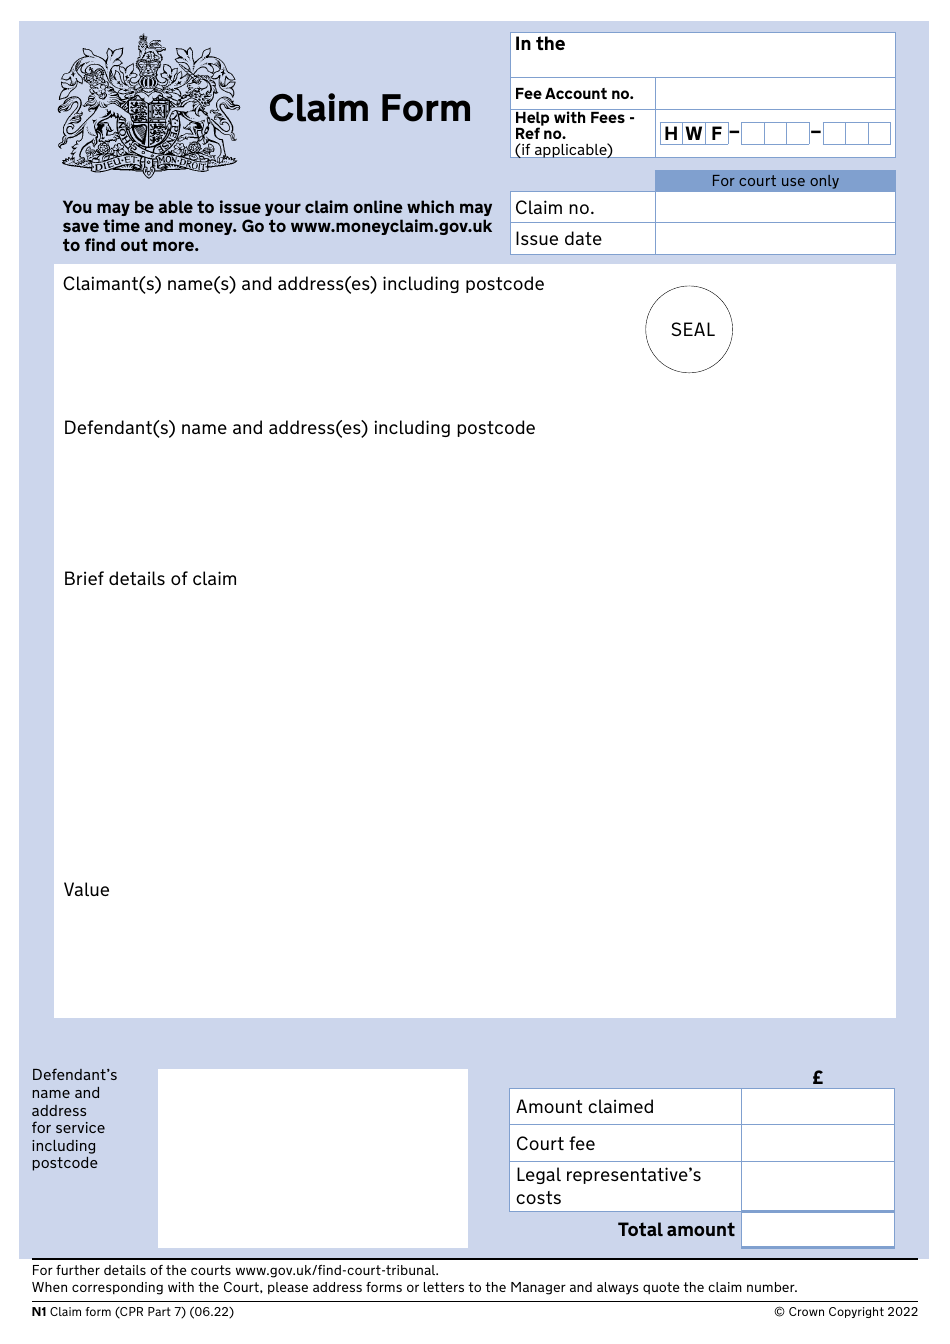 Form N1 Claim Form (Cpr Part 7) - United Kingdom, Page 1